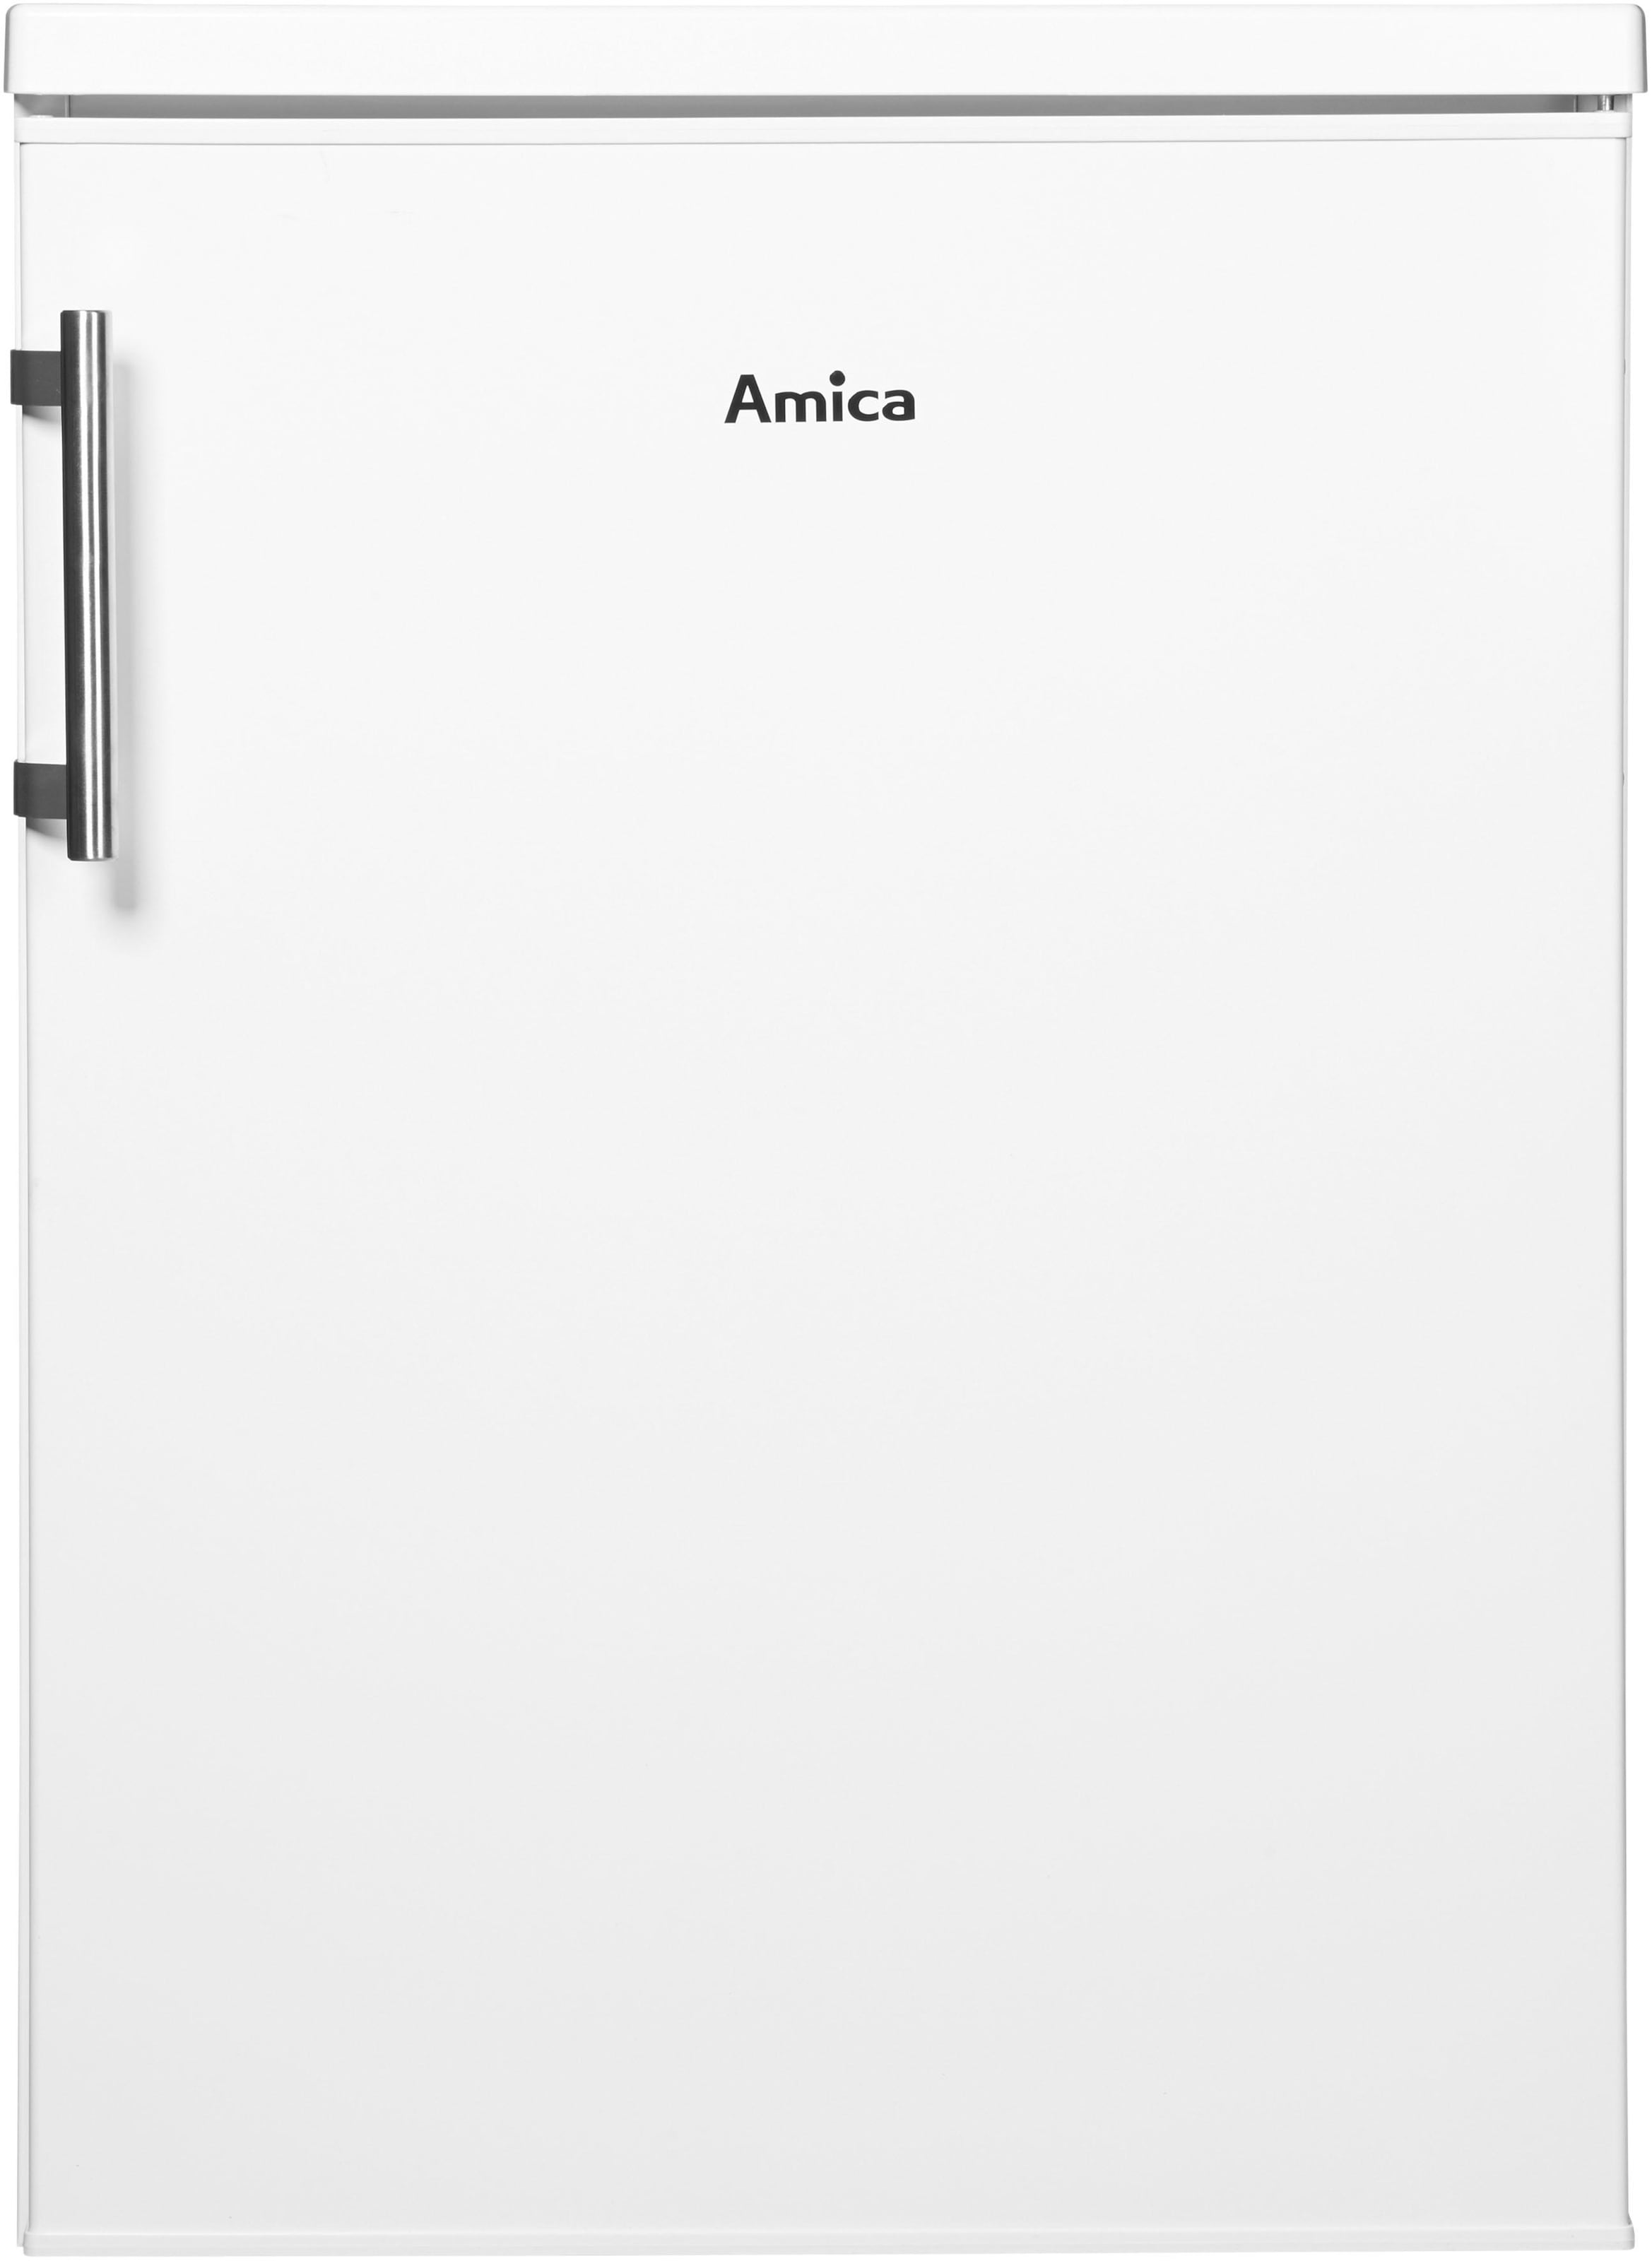 Amica Table Top Kühlschrank, VKS 15917W, 85 cm hoch, 60 cm breit